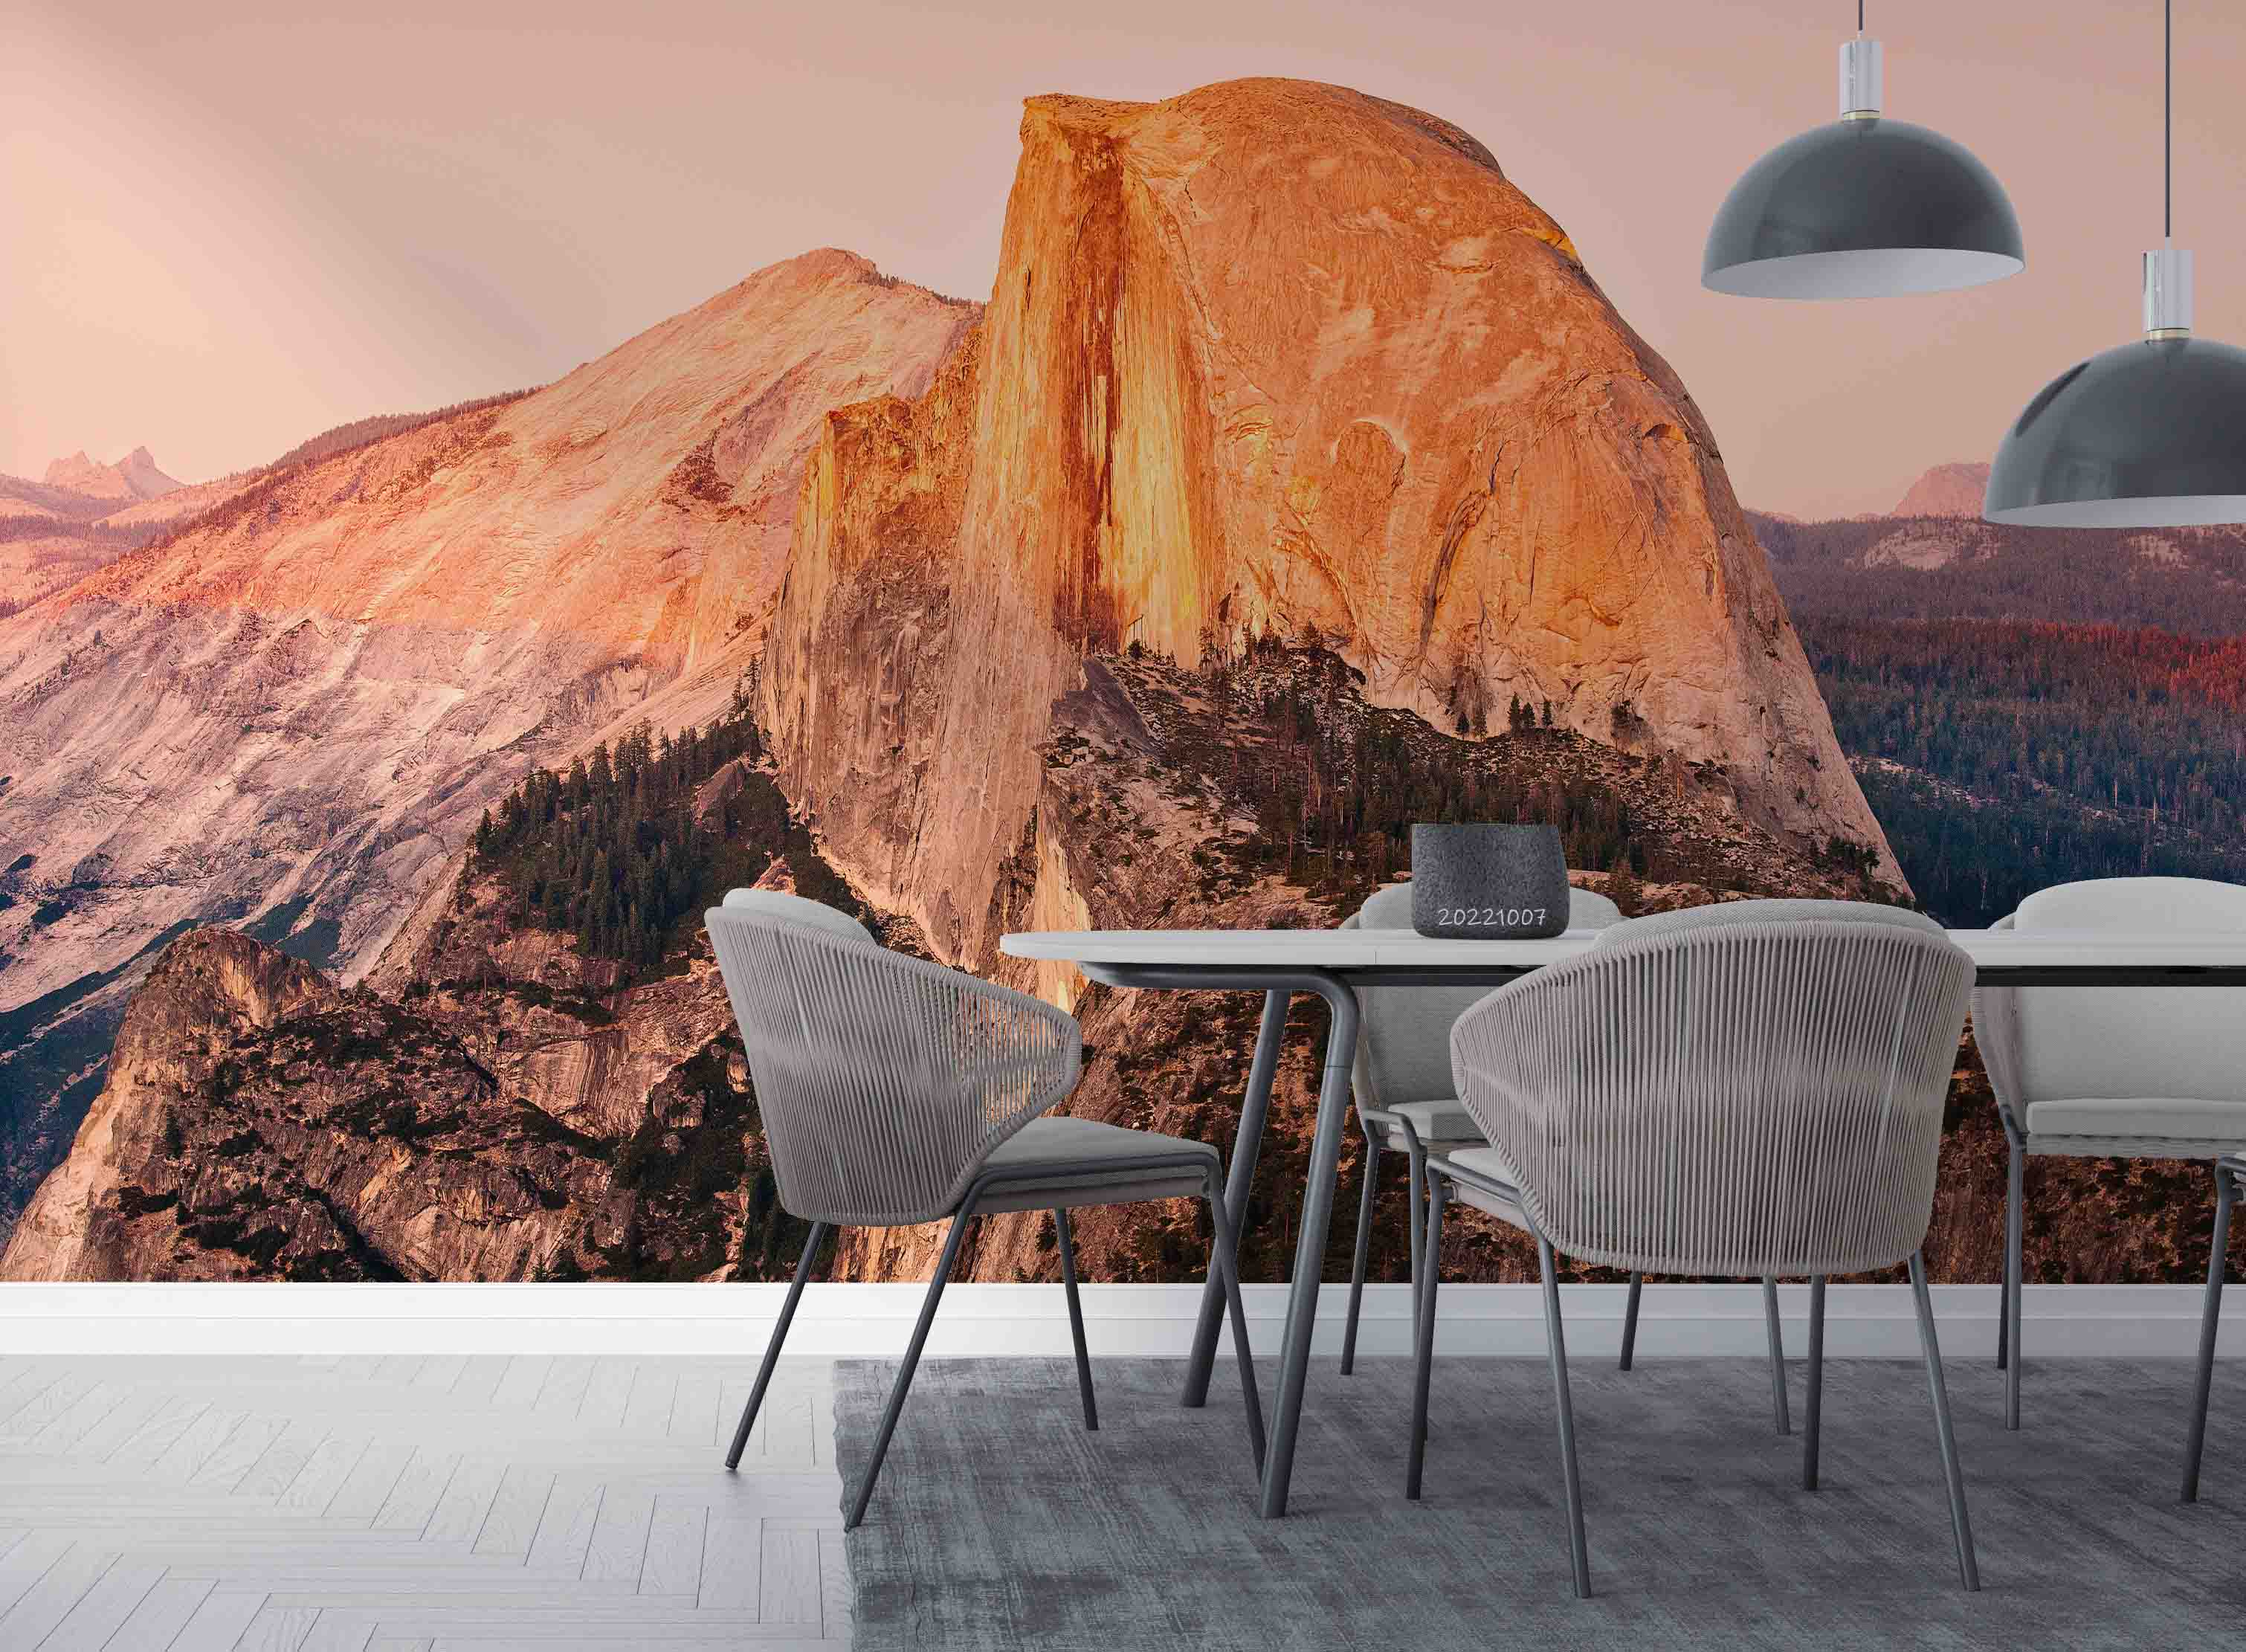 3D Stunning Scenic Rock Formation Yosemite National Park USA Wall Mural Wallpaper GD 3233- Jess Art Decoration